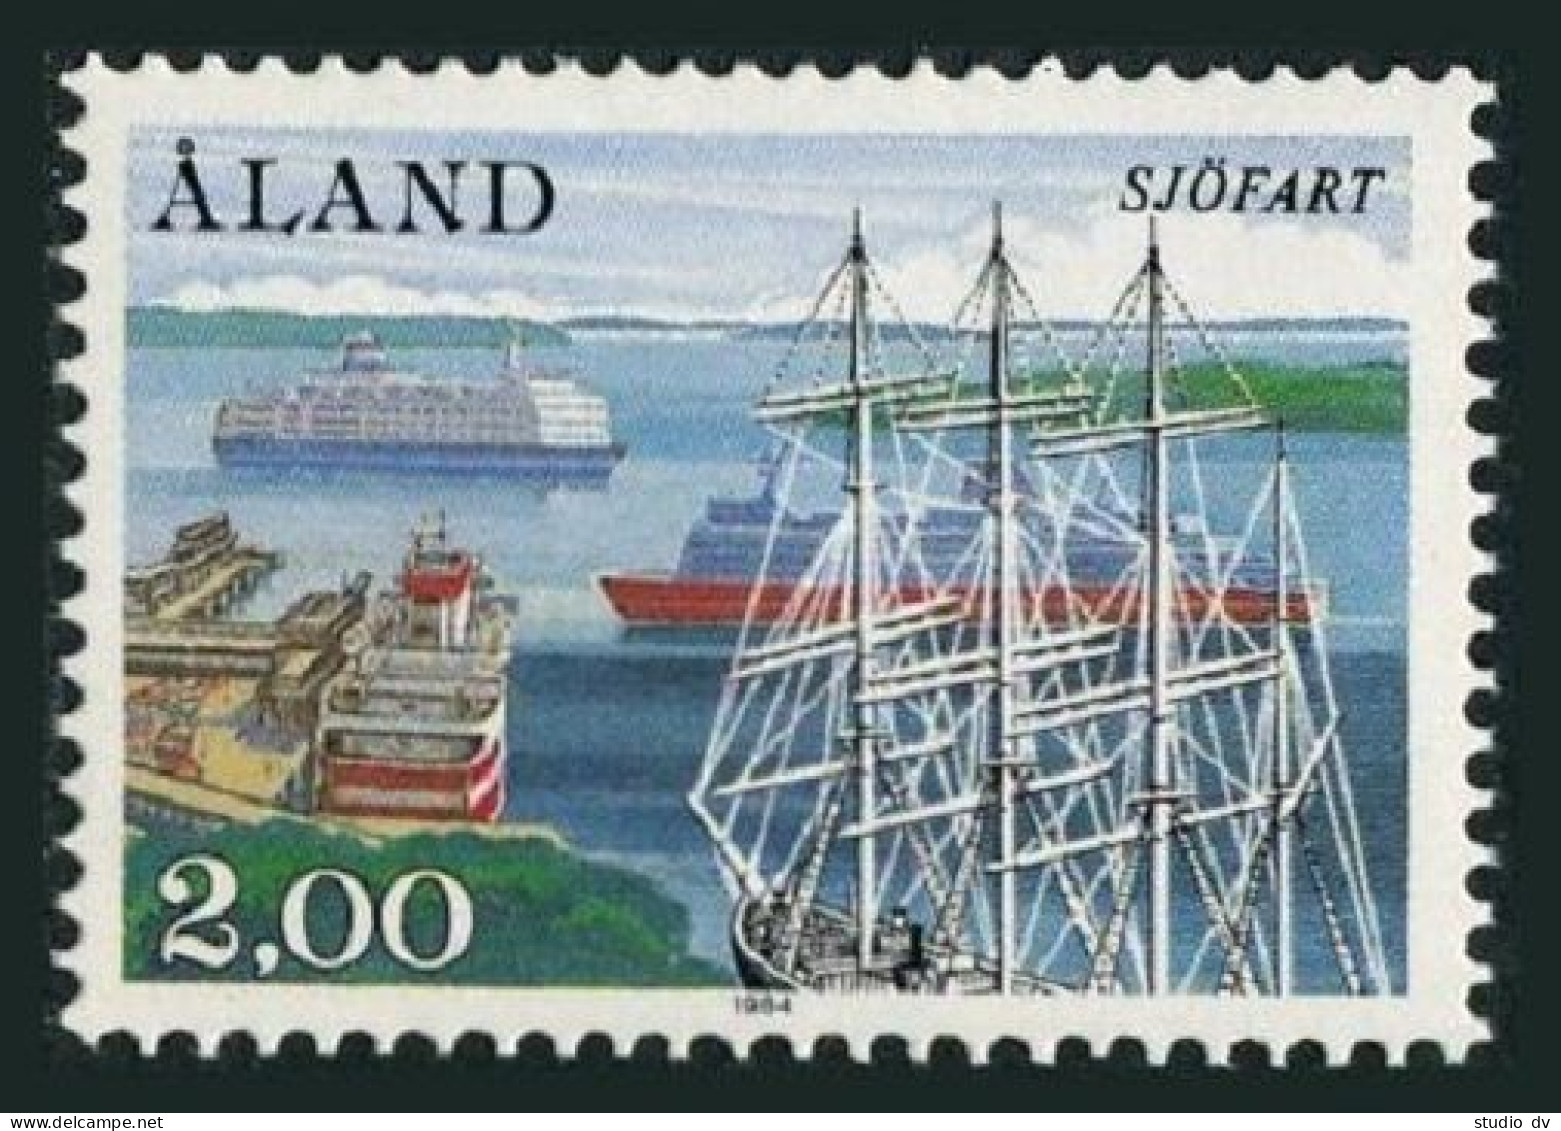 Finland-Aland 23, MNH. Michel 7. Bark Pommern, Meriehamn West Harbor, 1984. - Aland